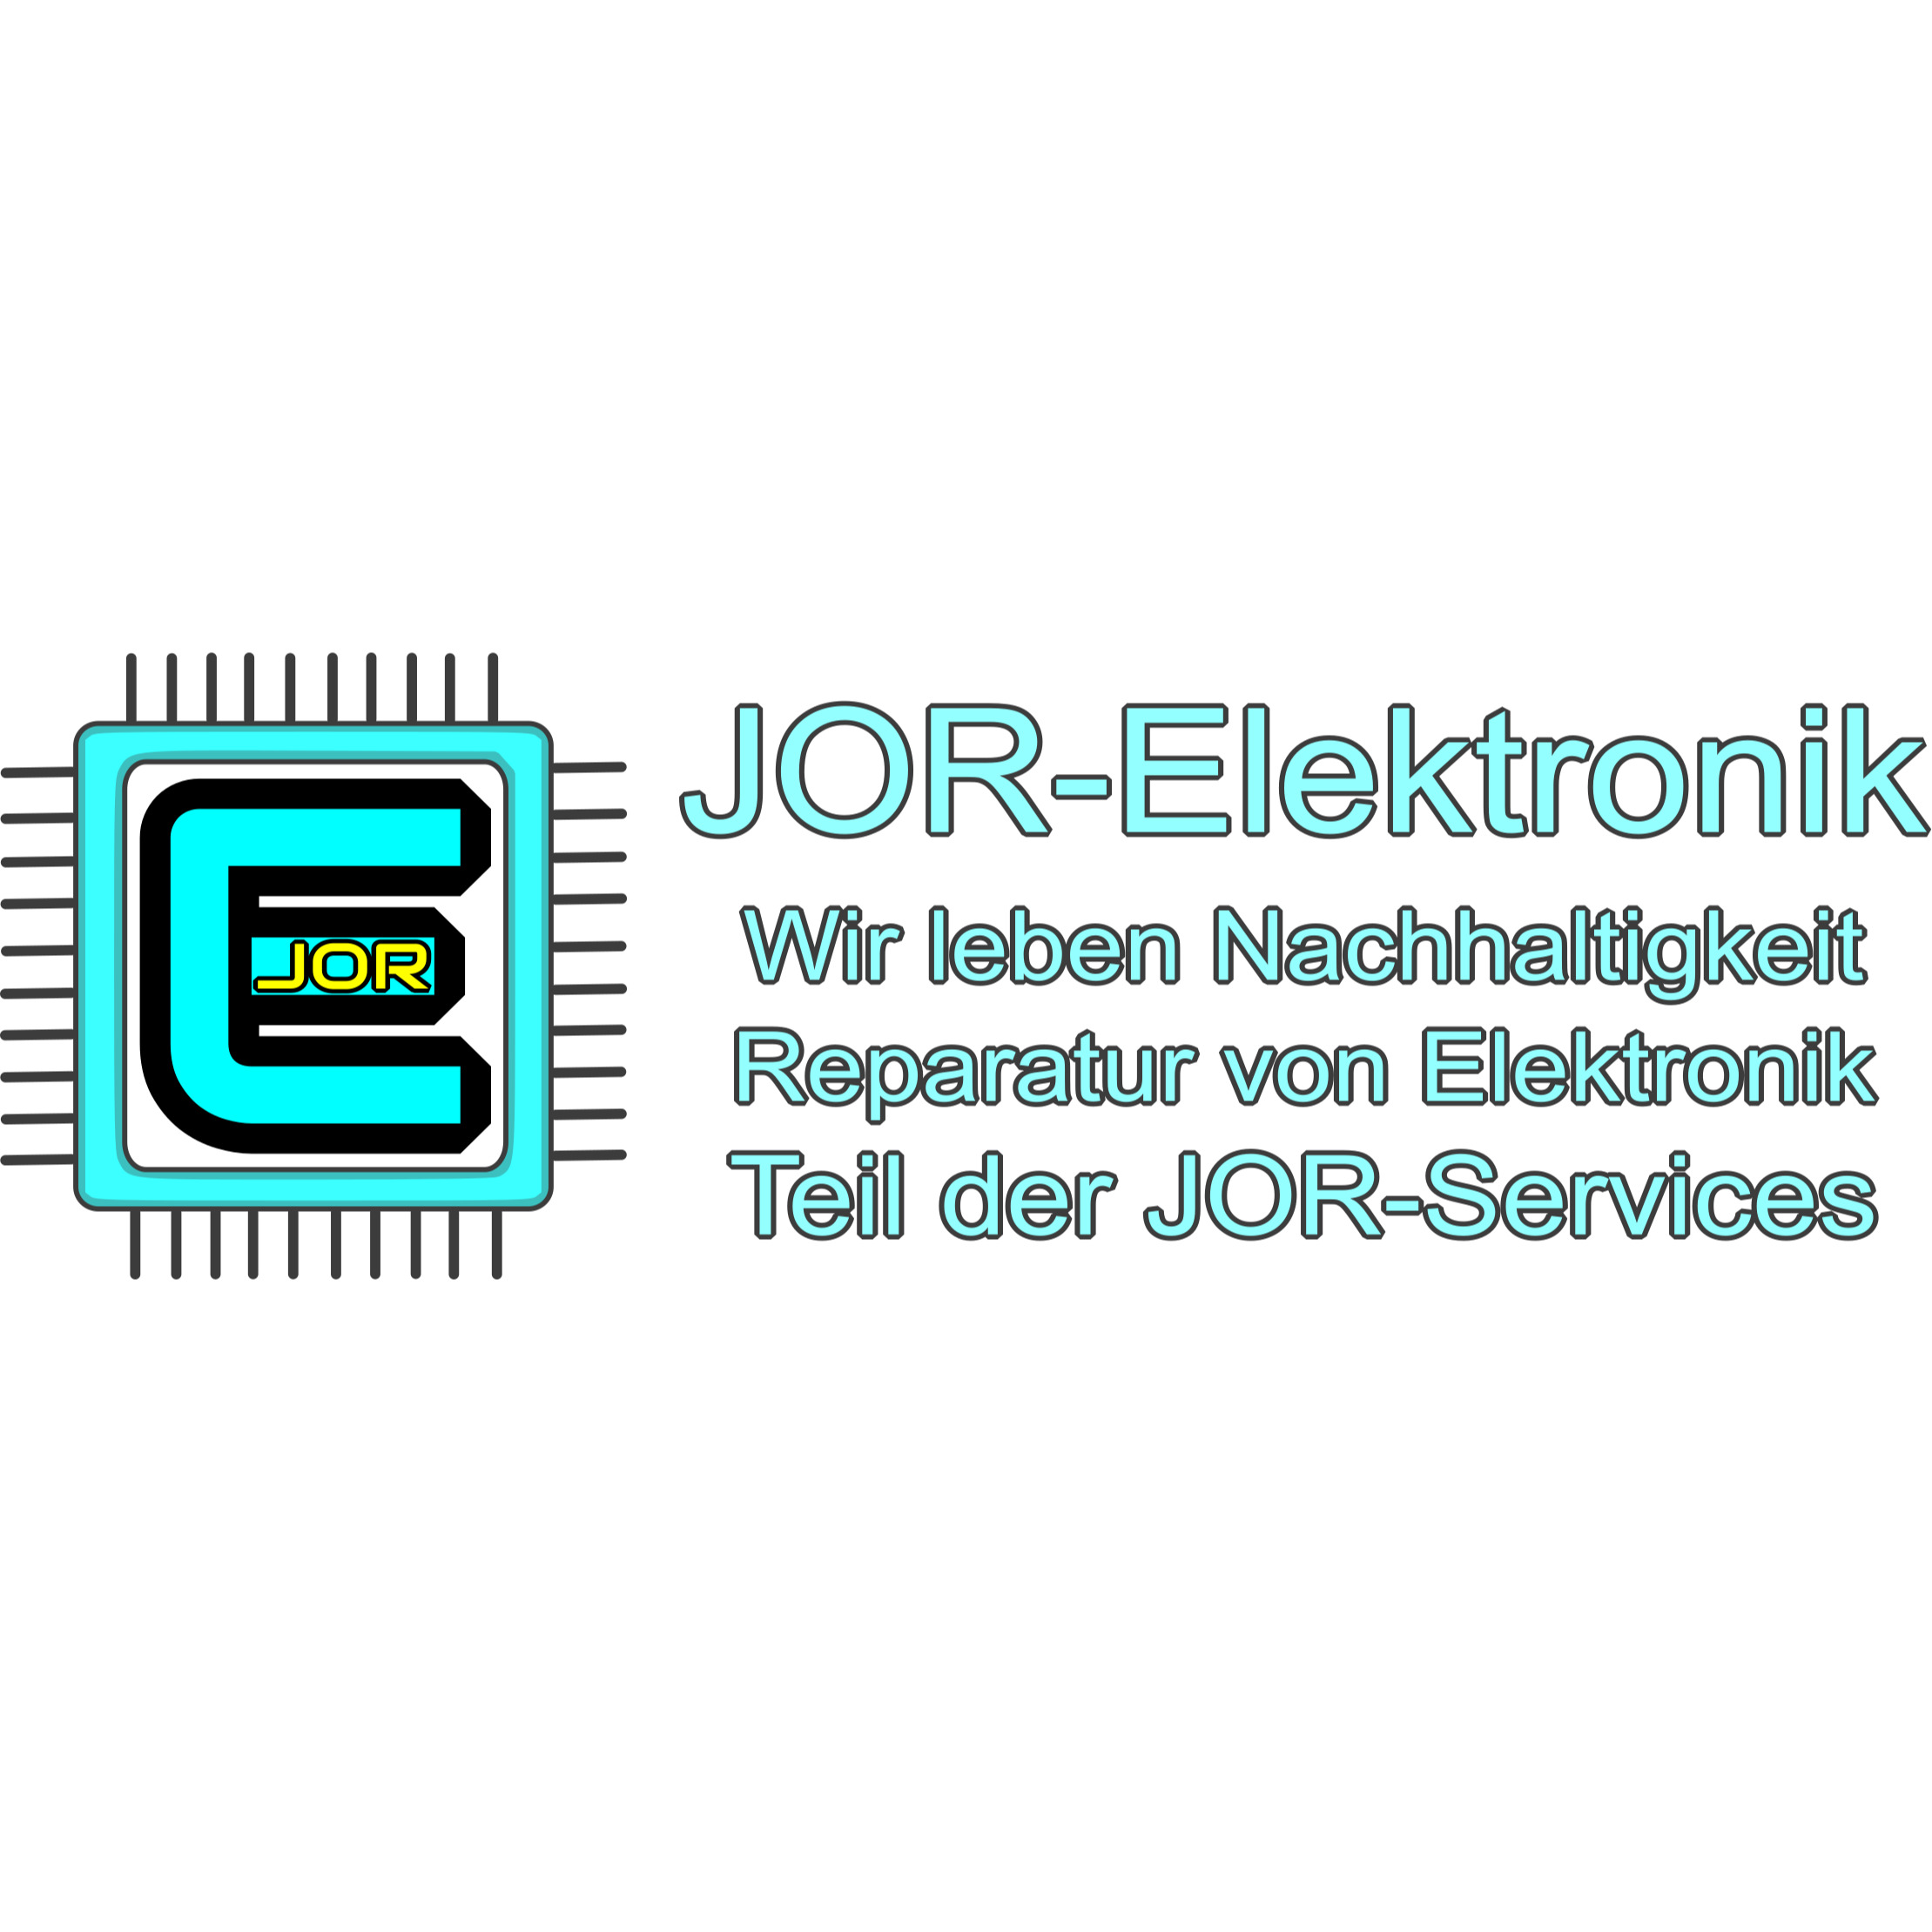 JOR-Elektronik Jens-Oliver-Rittaler  